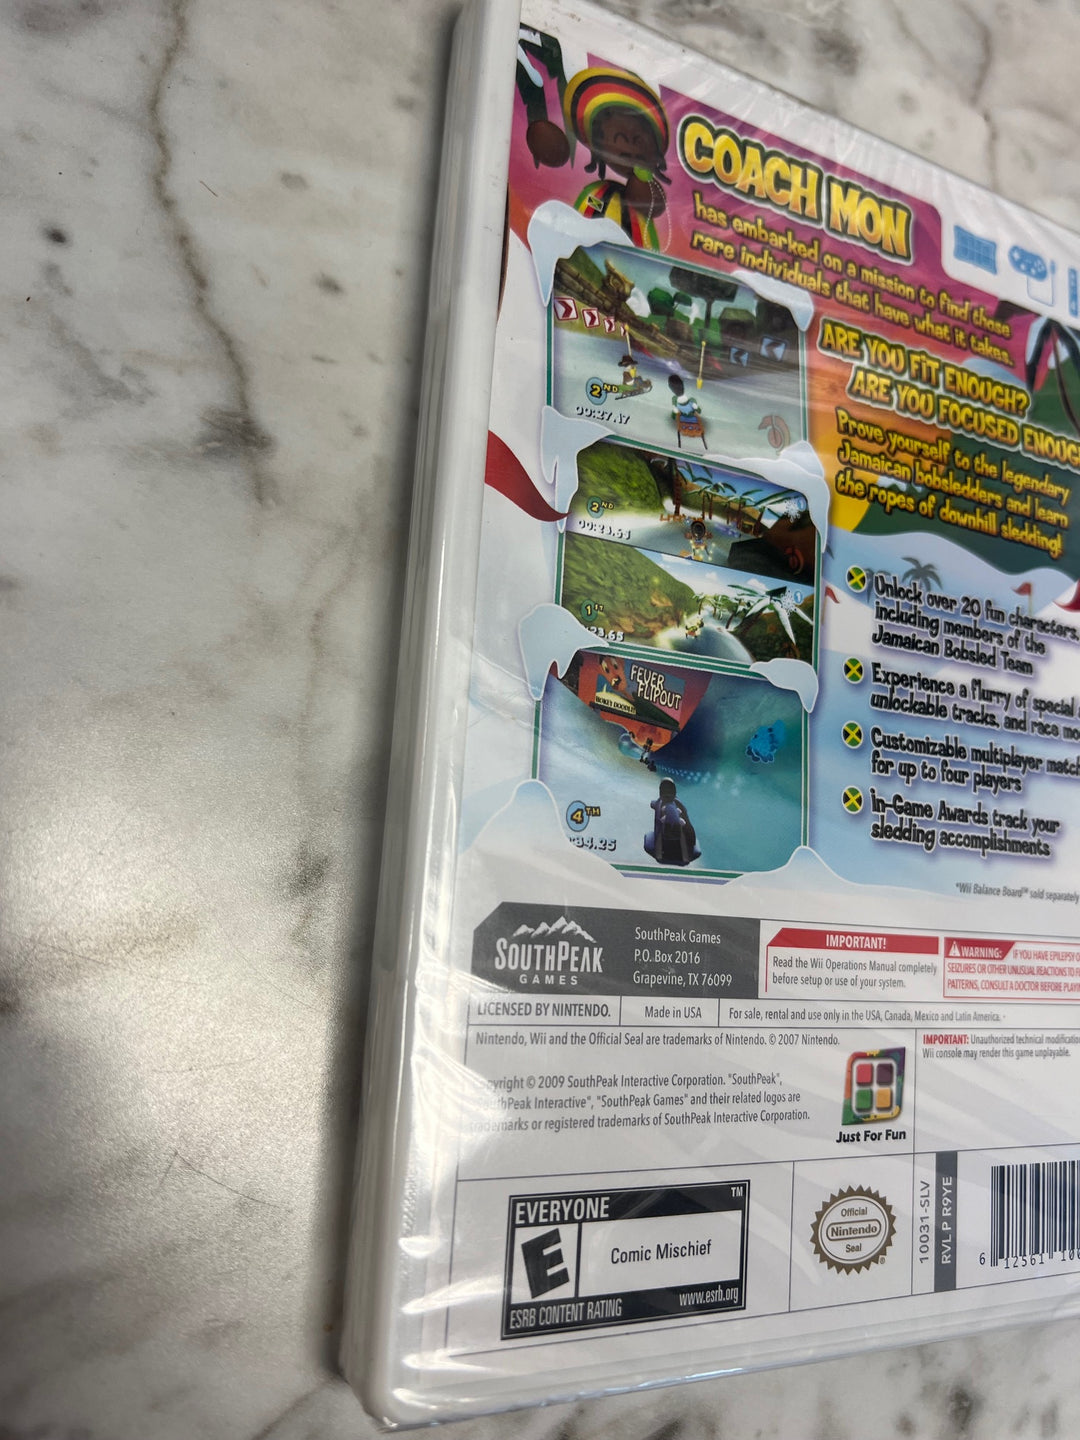 Sled Shred Nintendo Wii Brand New Sealed DN7224